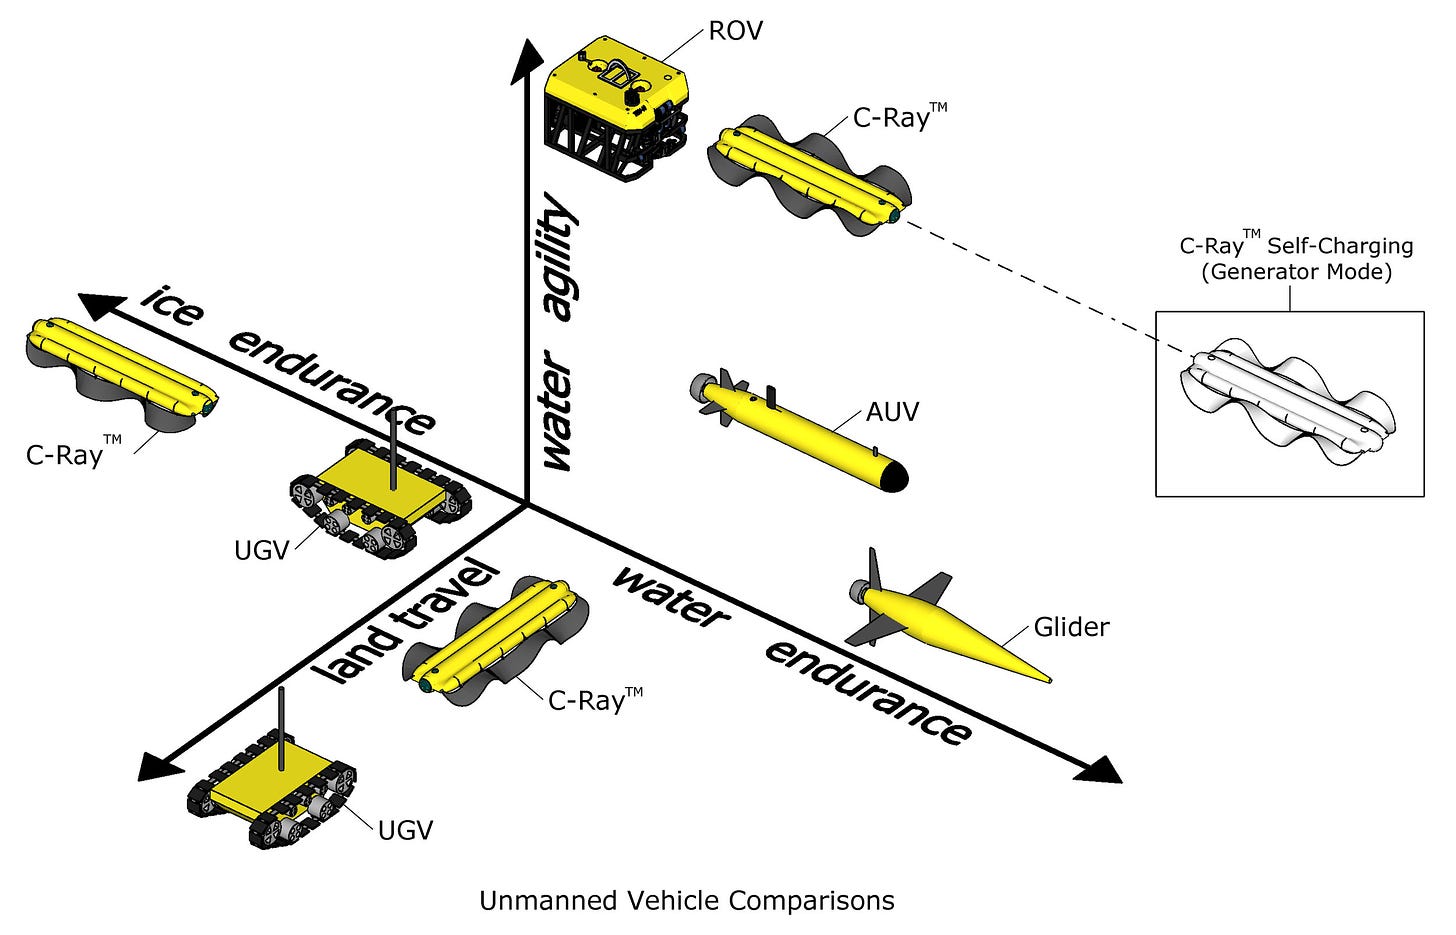 Pliant_Energy_C-Ray_vehicle_comparisons